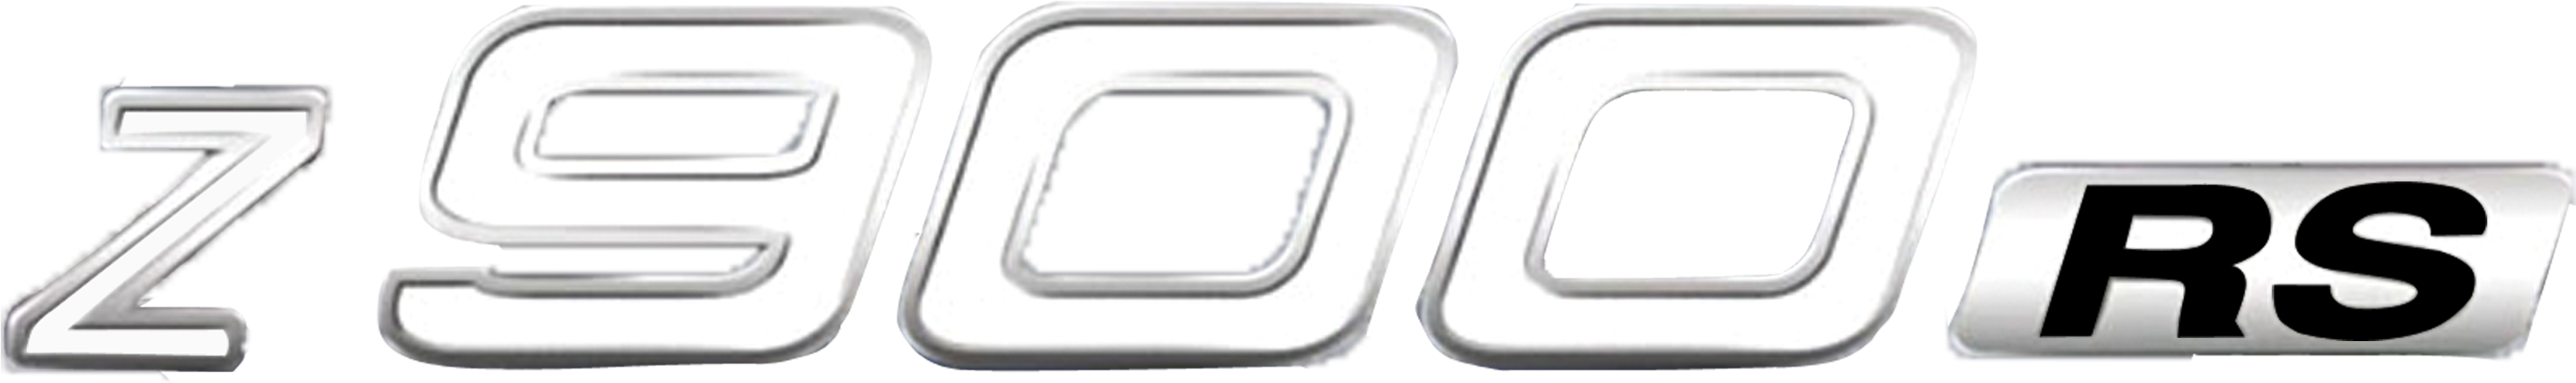 Z900RS Logo